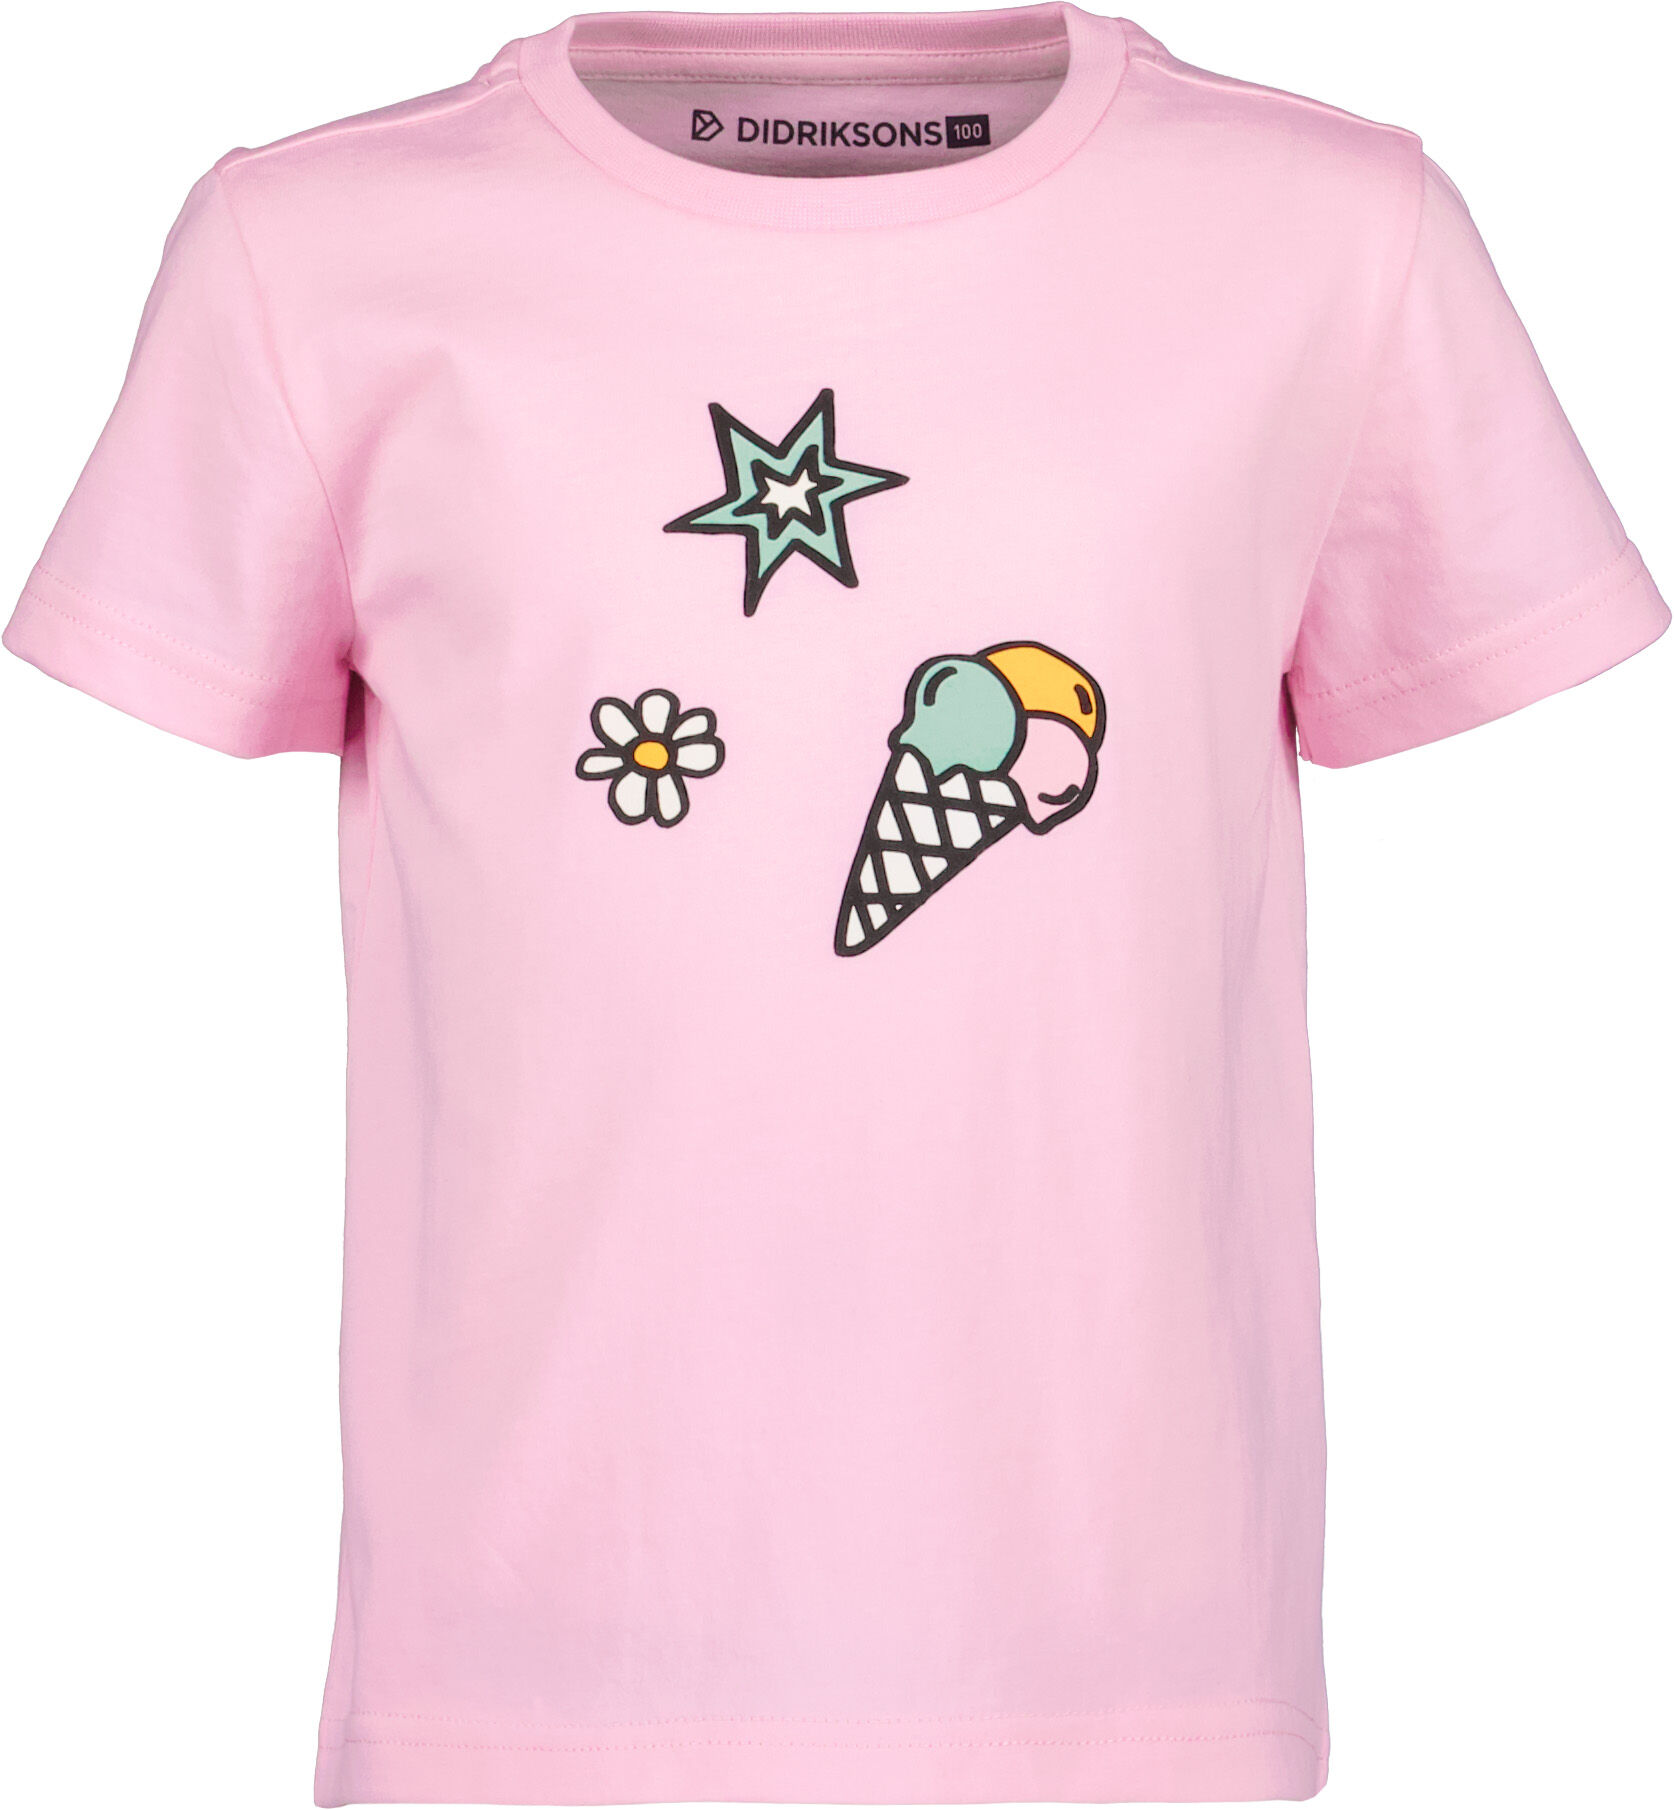 Didriksons Mynta T-shirt Orchid Pink 90